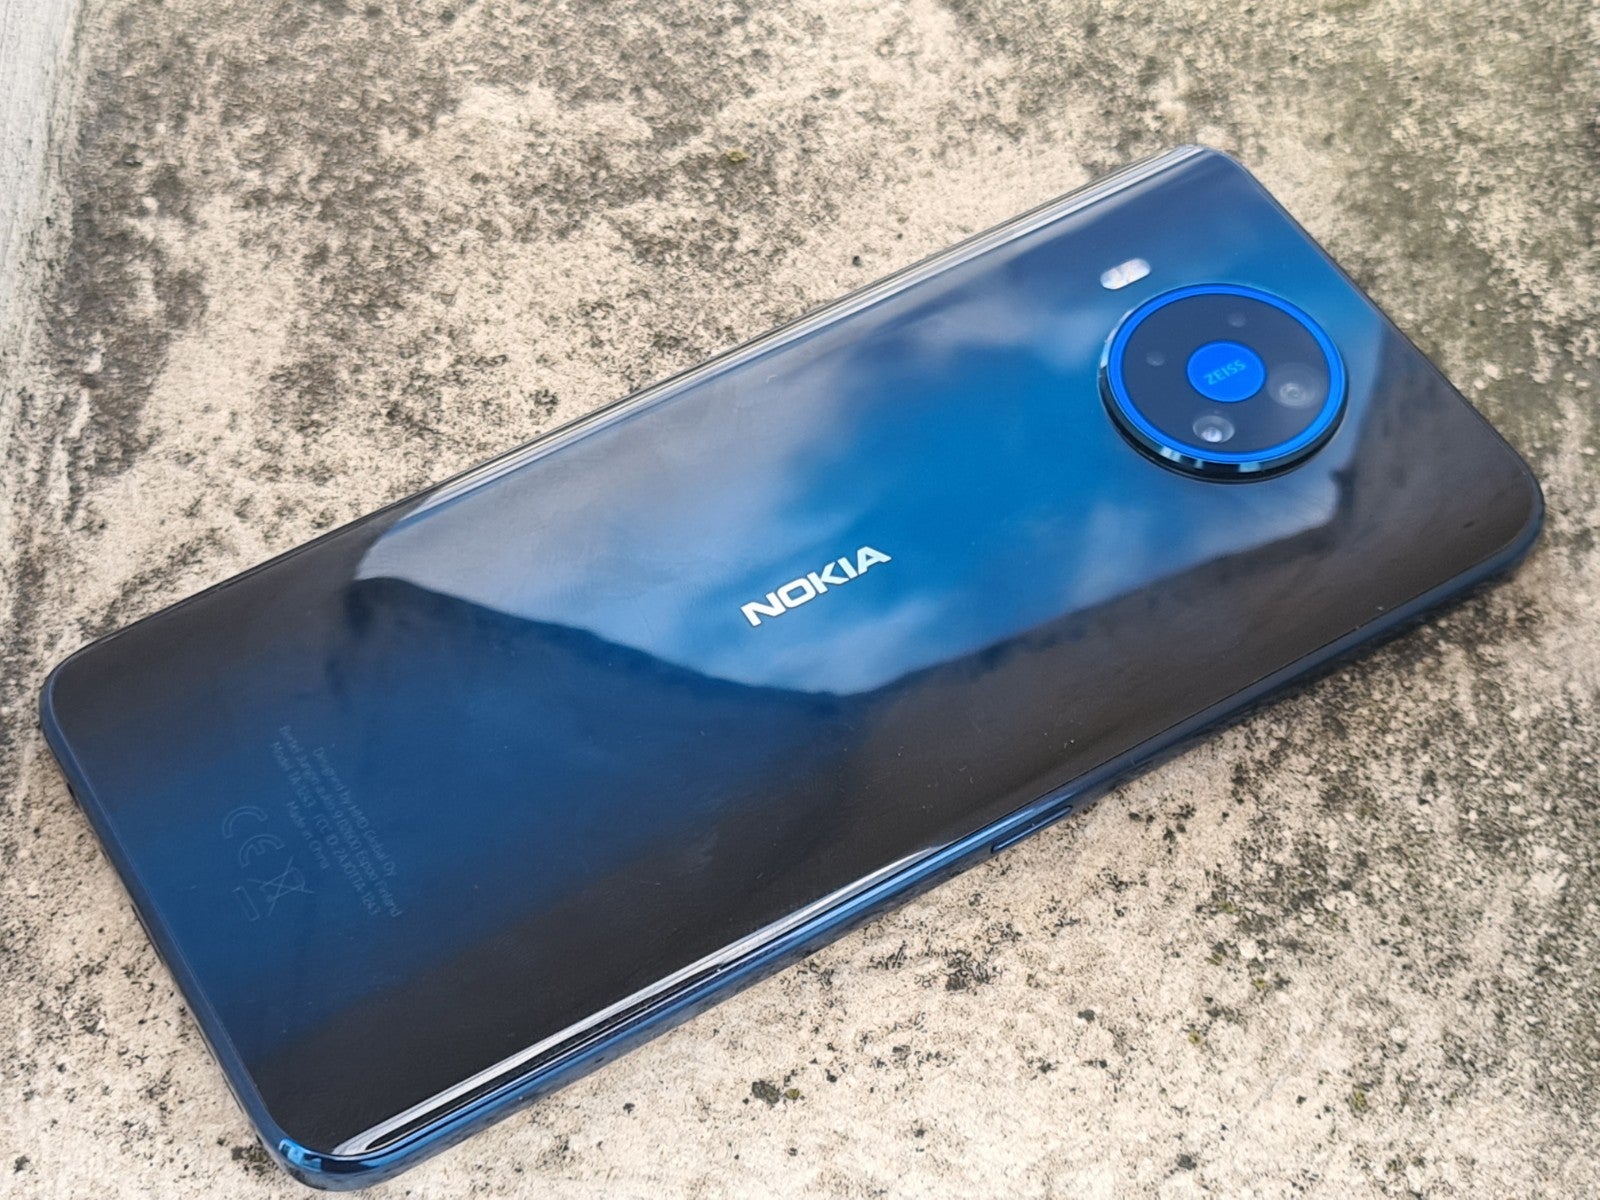 20201112 133046 - Nokia 8.3 5G Price In Nigeria & Full Review